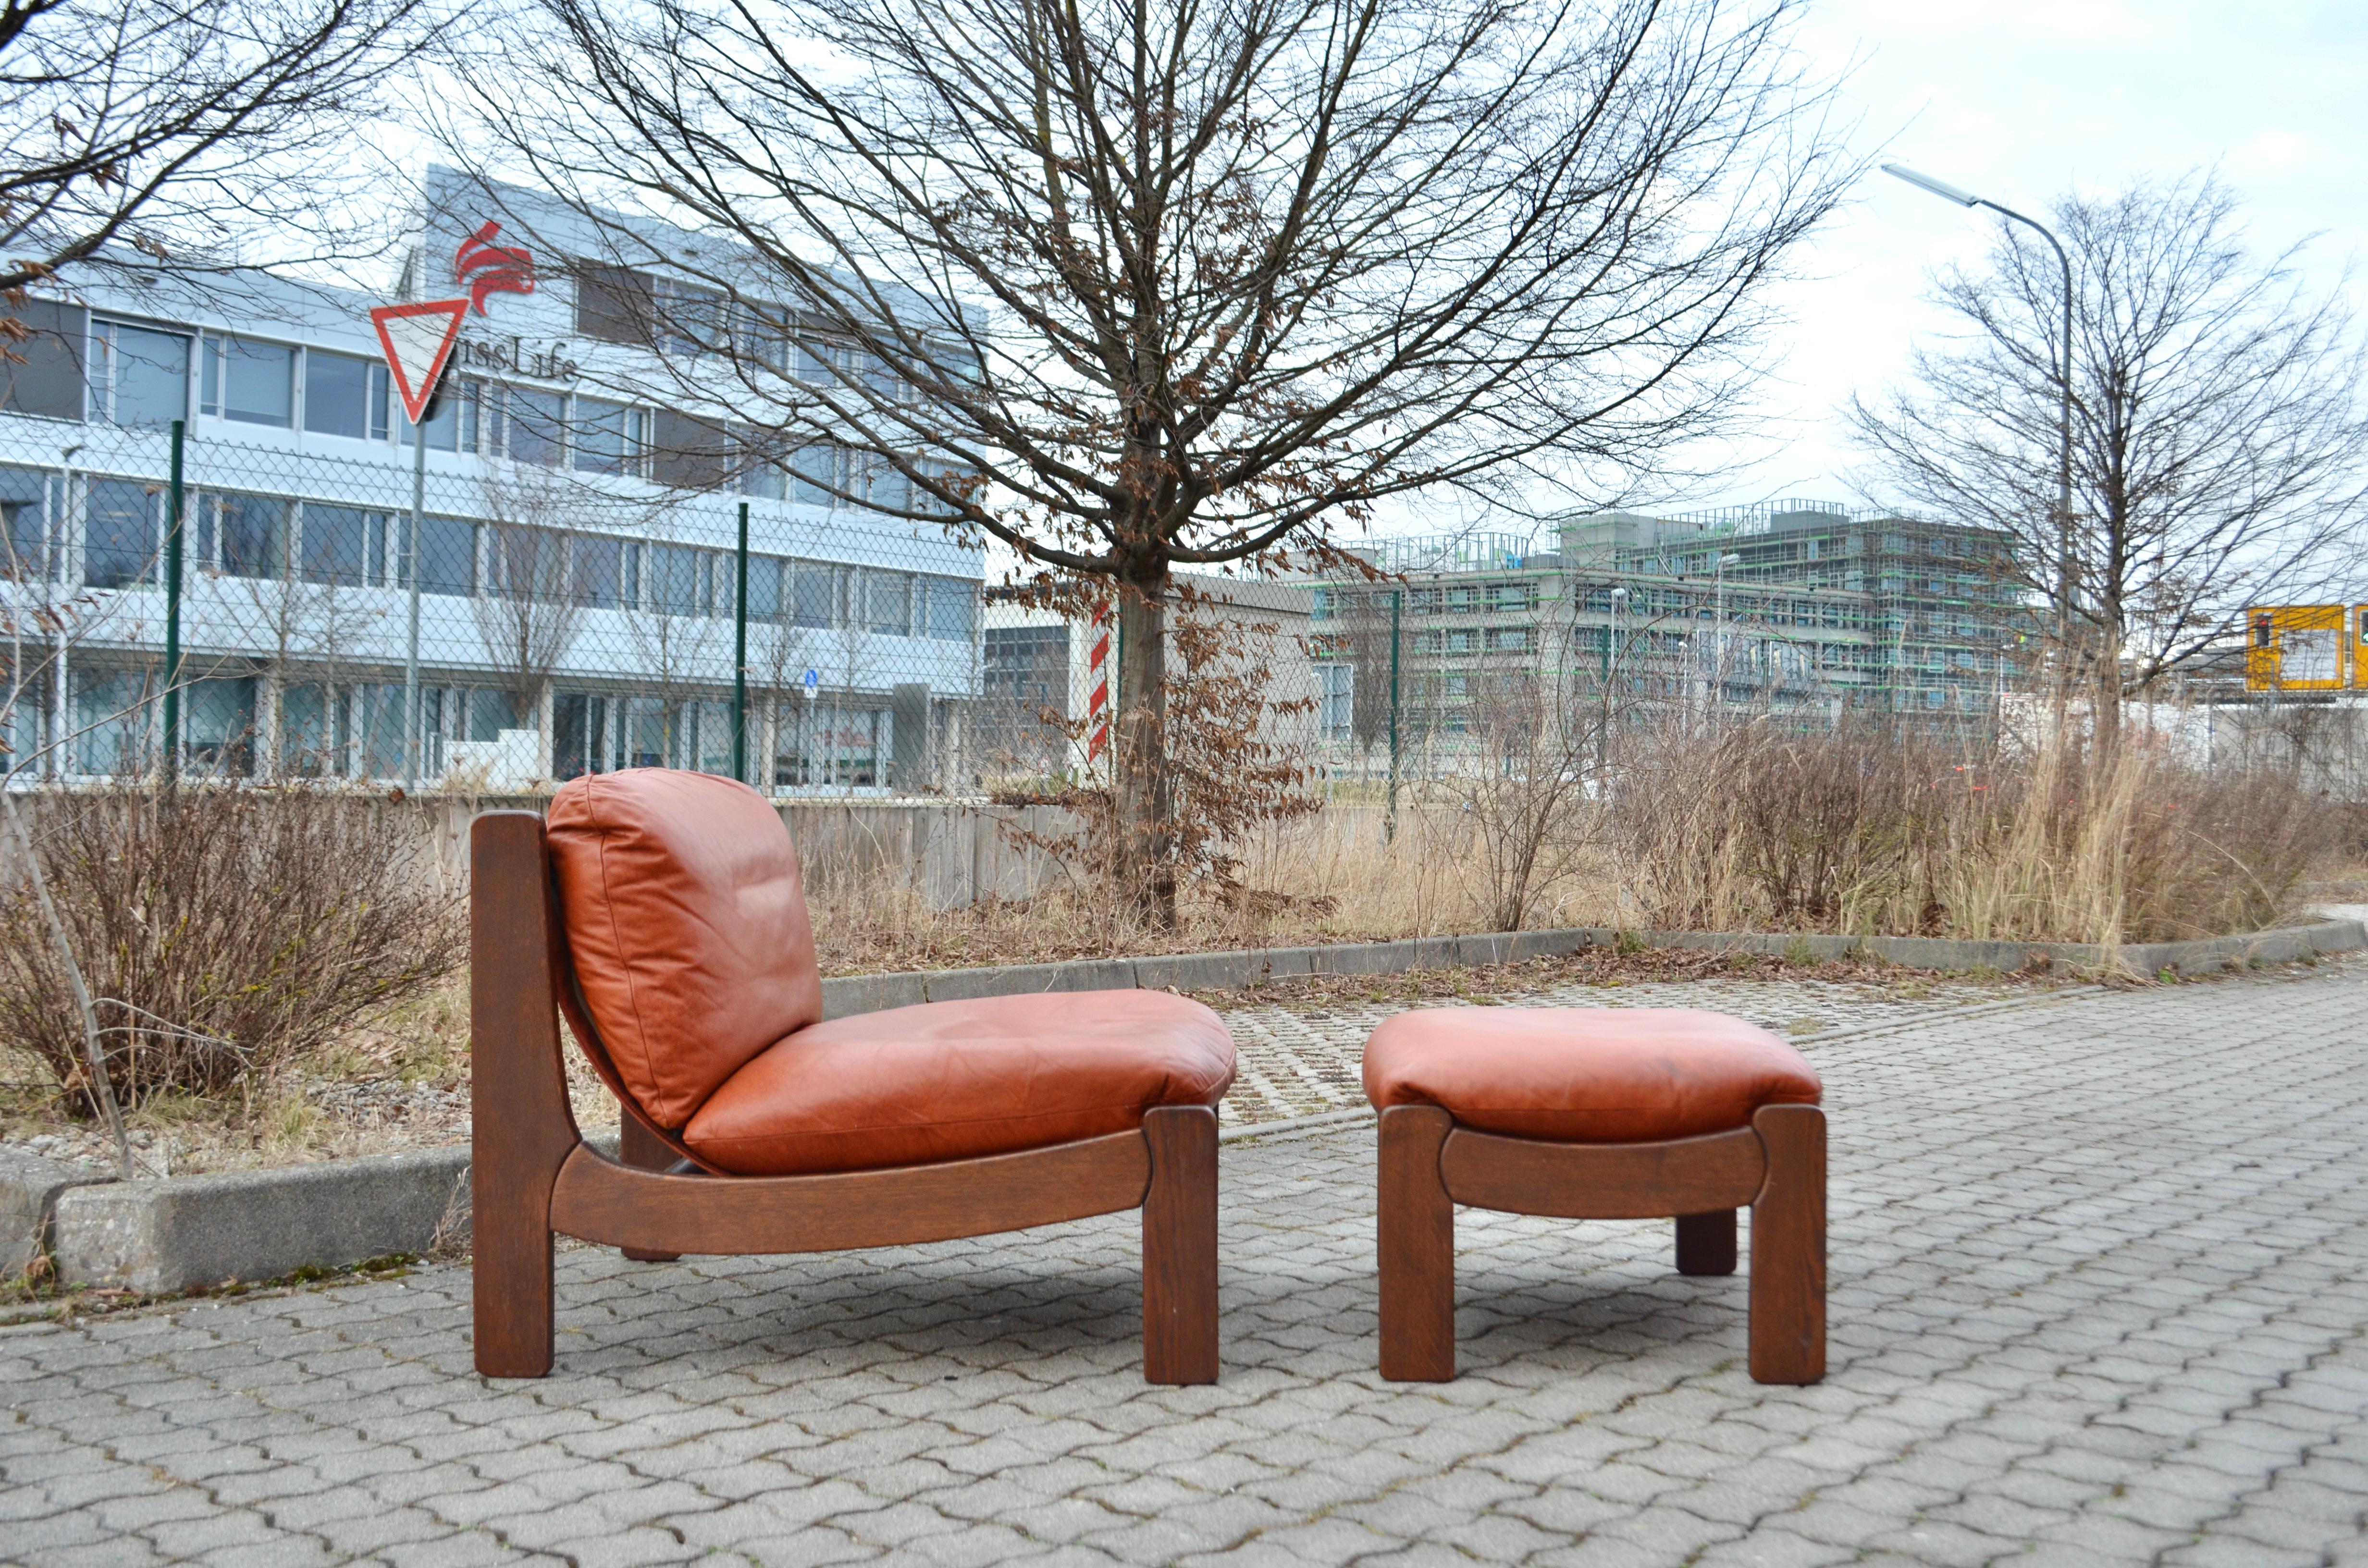 Dreipunkt International Vintage Sling Modular Cognac Leather Sectional Sofa  In Good Condition For Sale In Munich, Bavaria